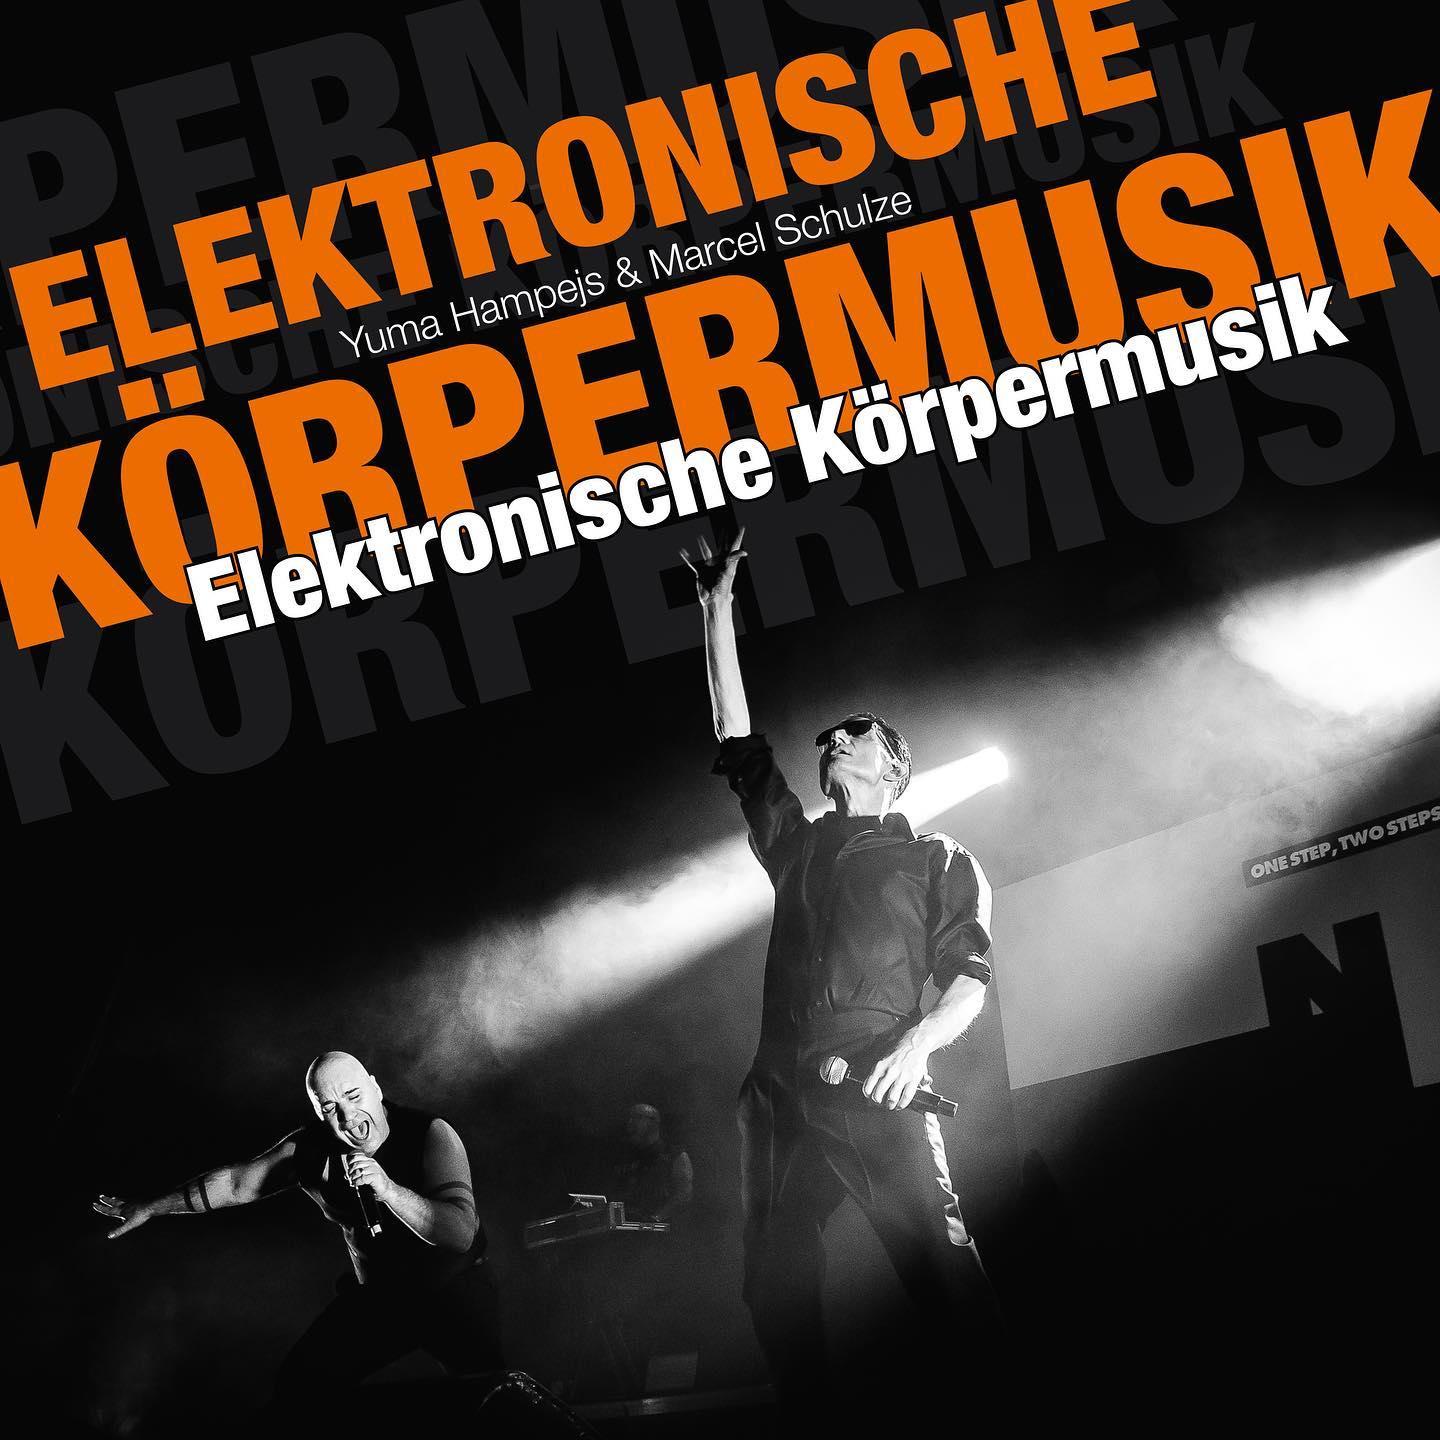 Featured image for “Elektronische Körpermusik goes arround the World….”